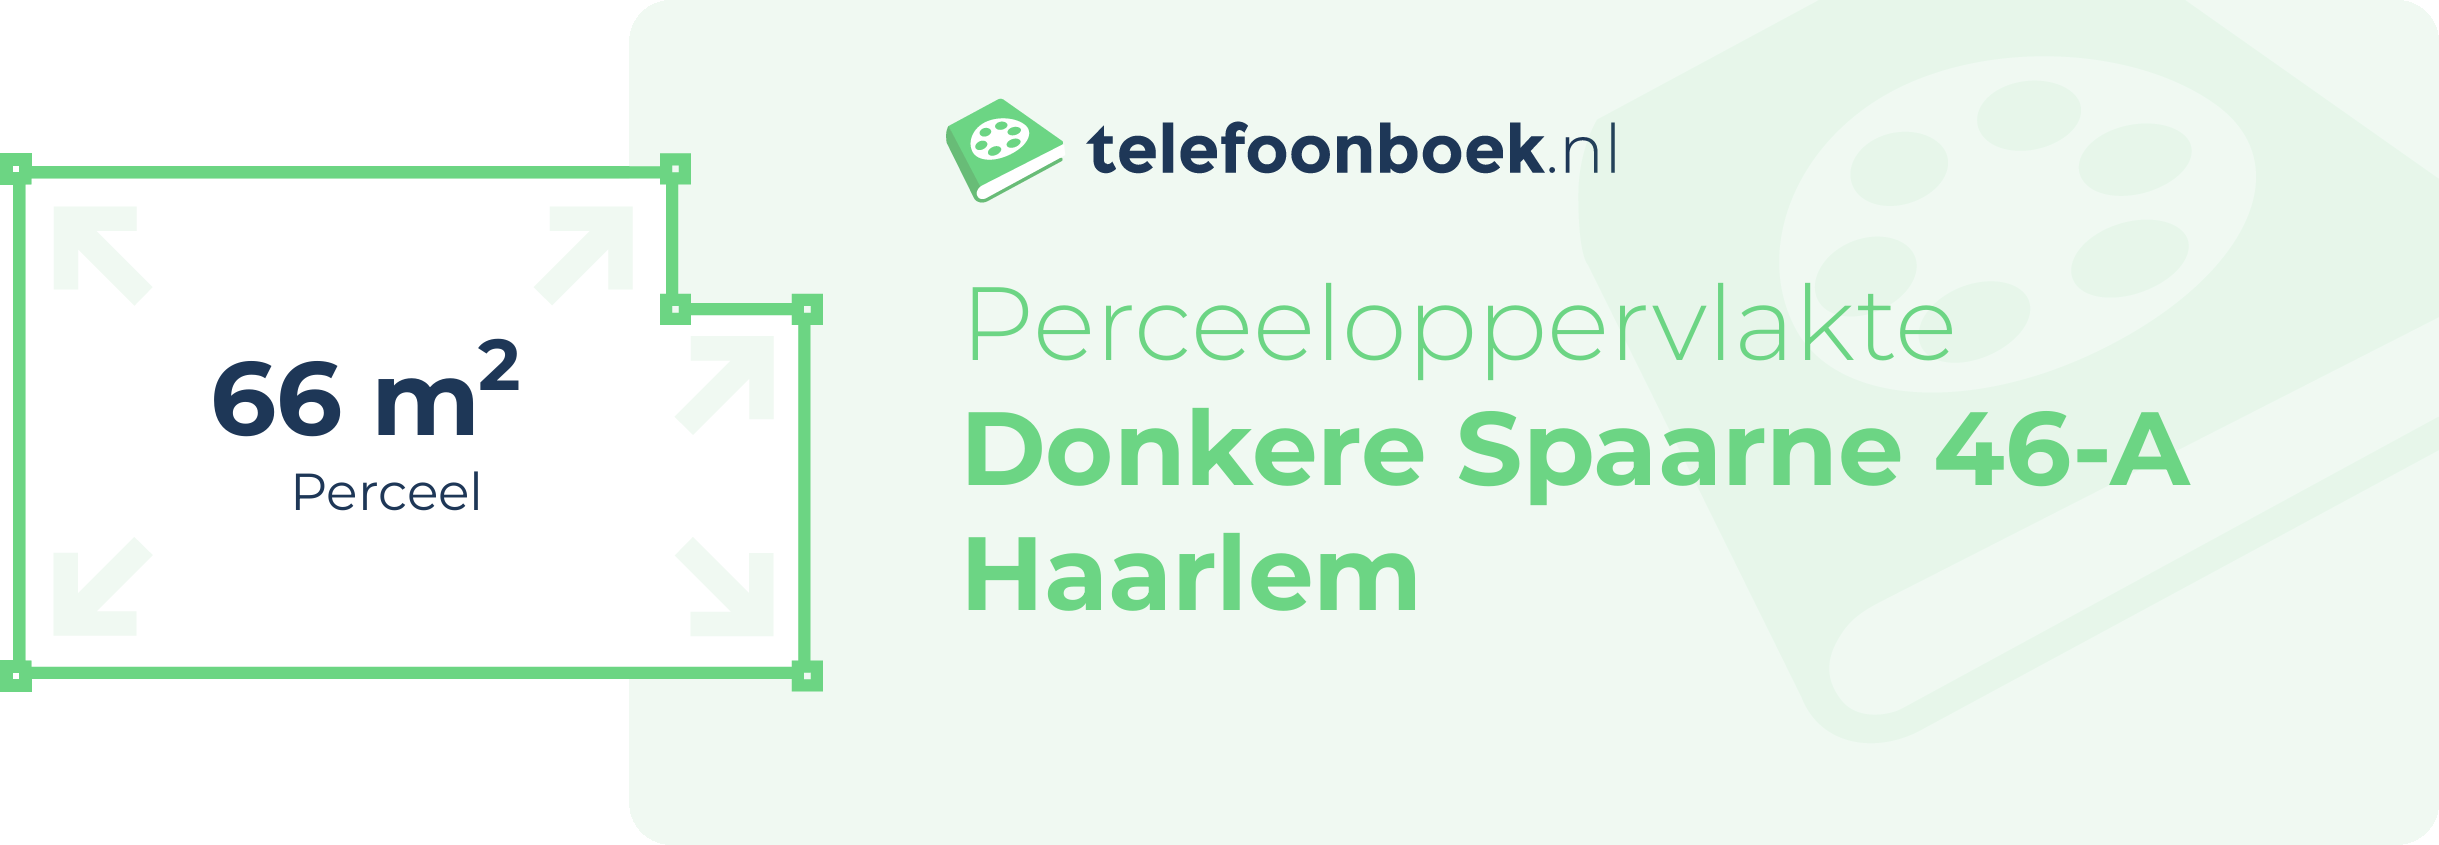 Perceeloppervlakte Donkere Spaarne 46-A Haarlem